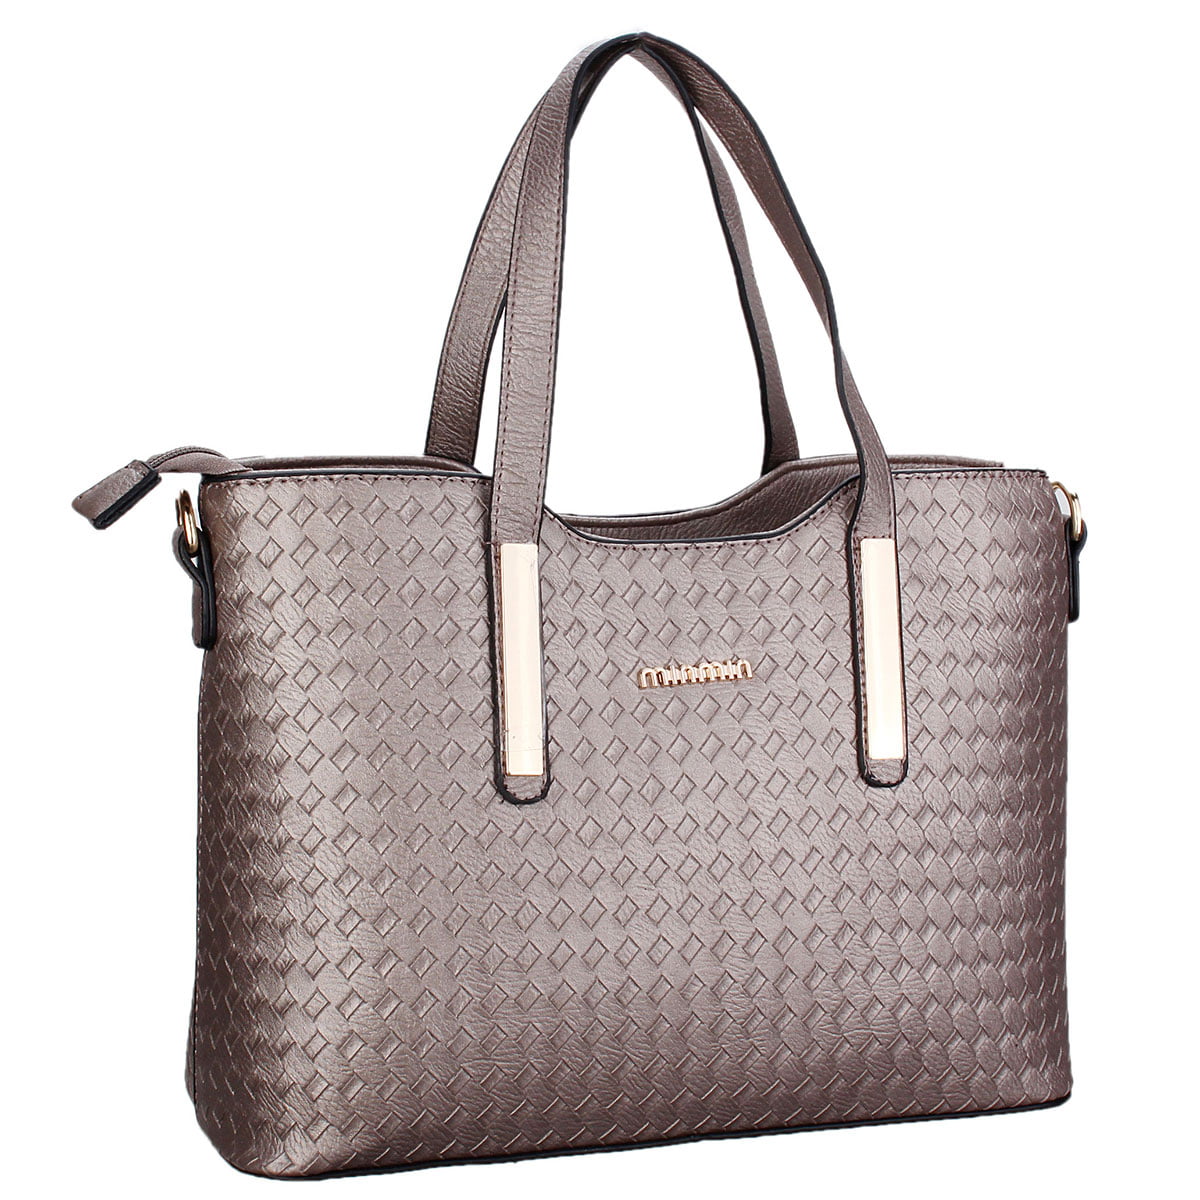 3PCs/Set Fashion Purses Handbags For Women Vintage Shoulder Bag Tote ...